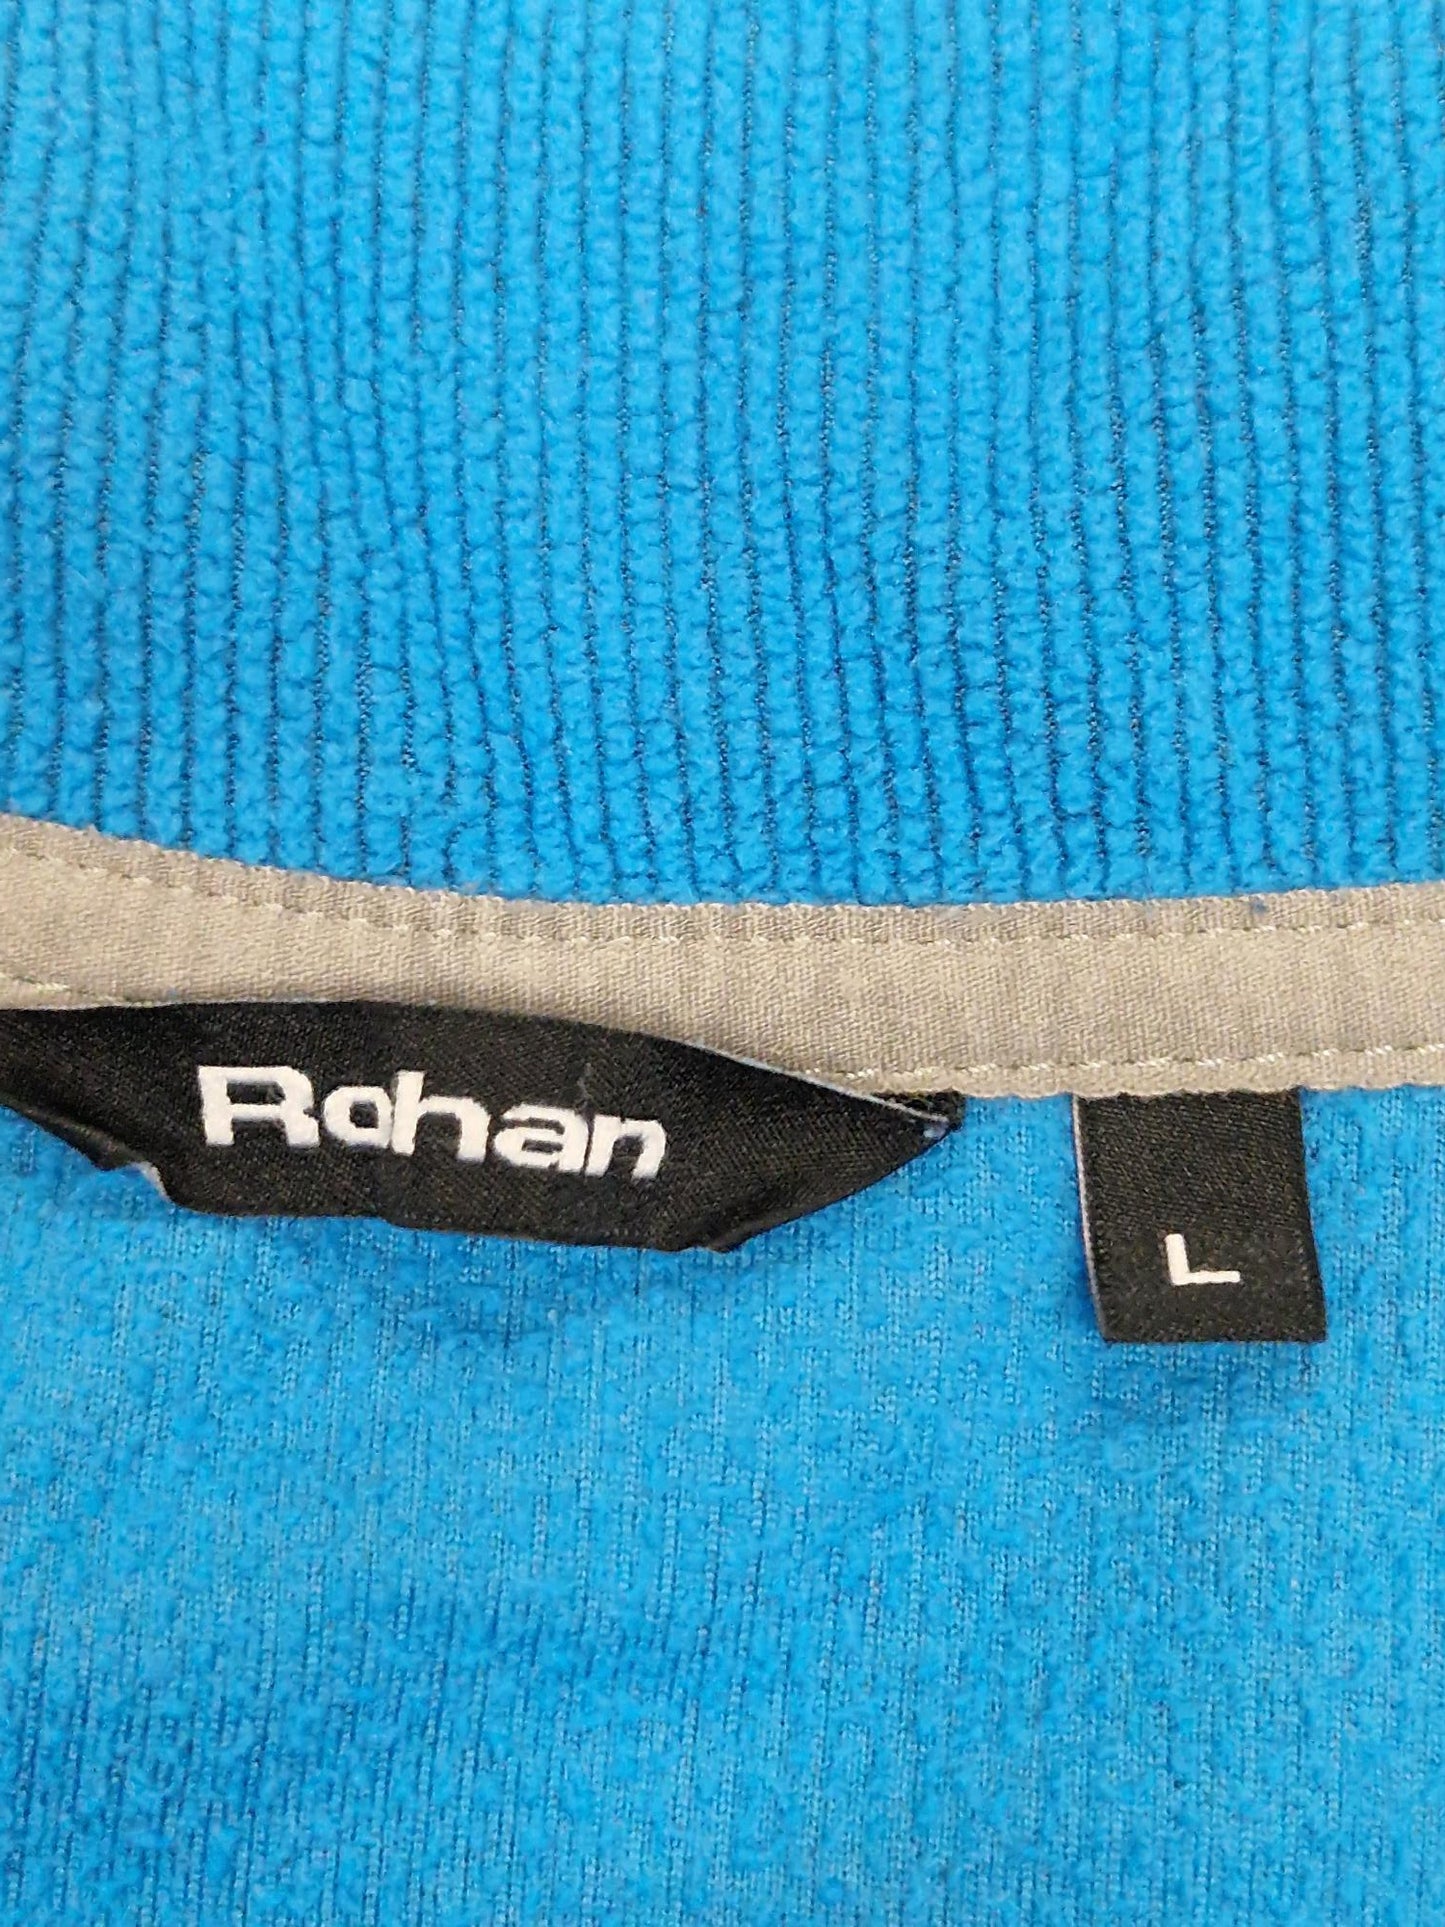 Rohan Ladies Light Blue Fleece - Size Large